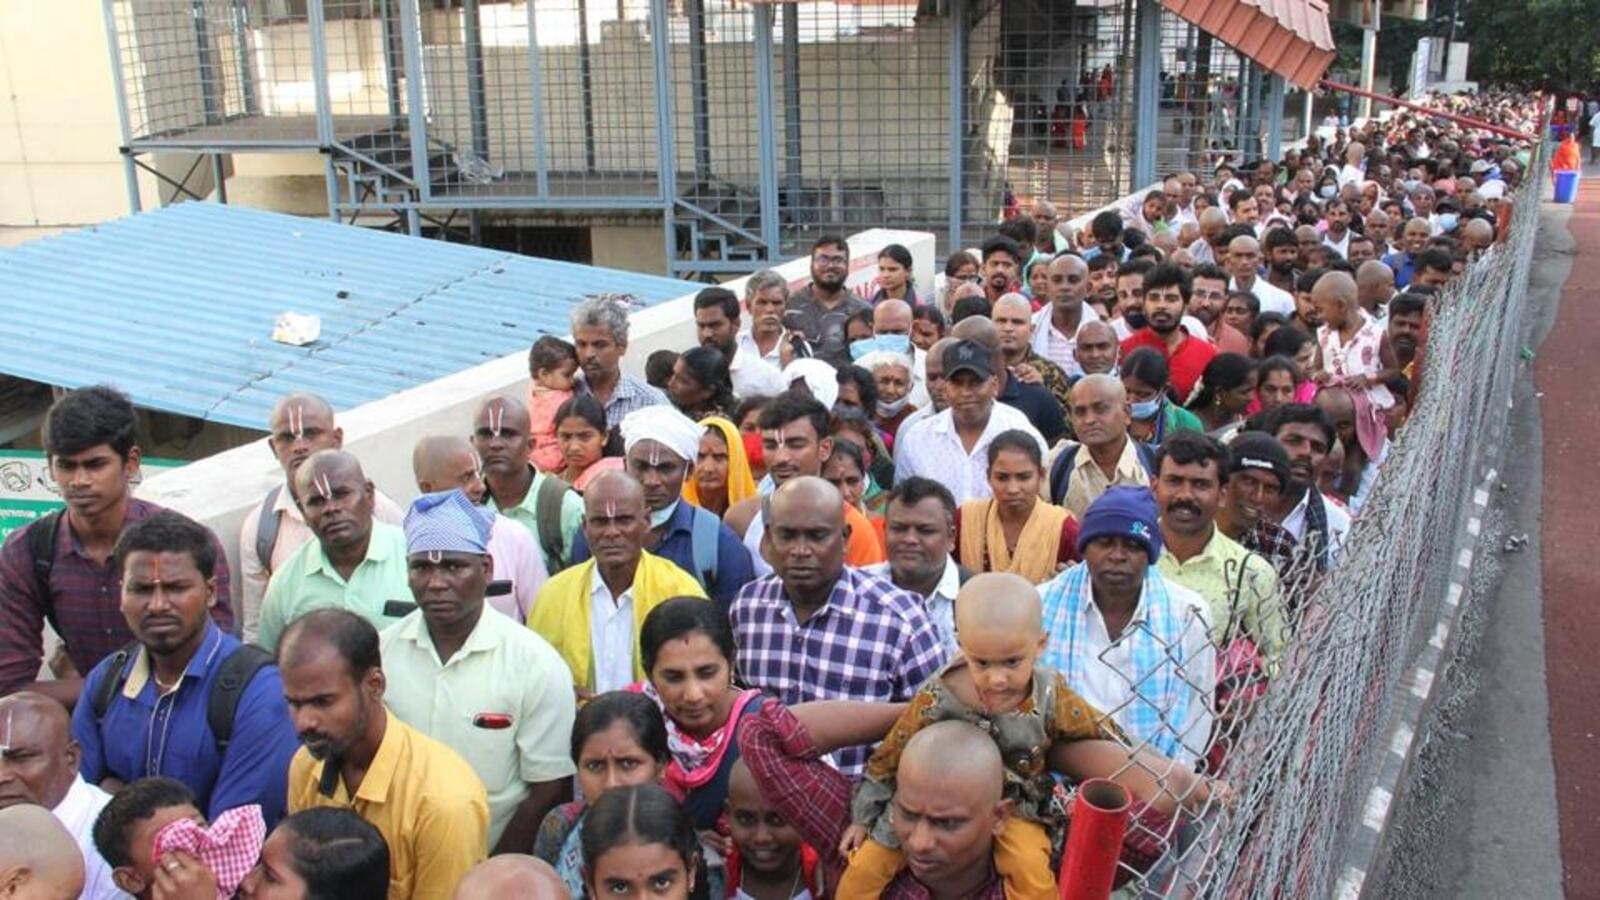 Tirumala witnesses heavy pilgrim rush, darshan after over 48-hour wait |  Latest News India - Hindustan Times